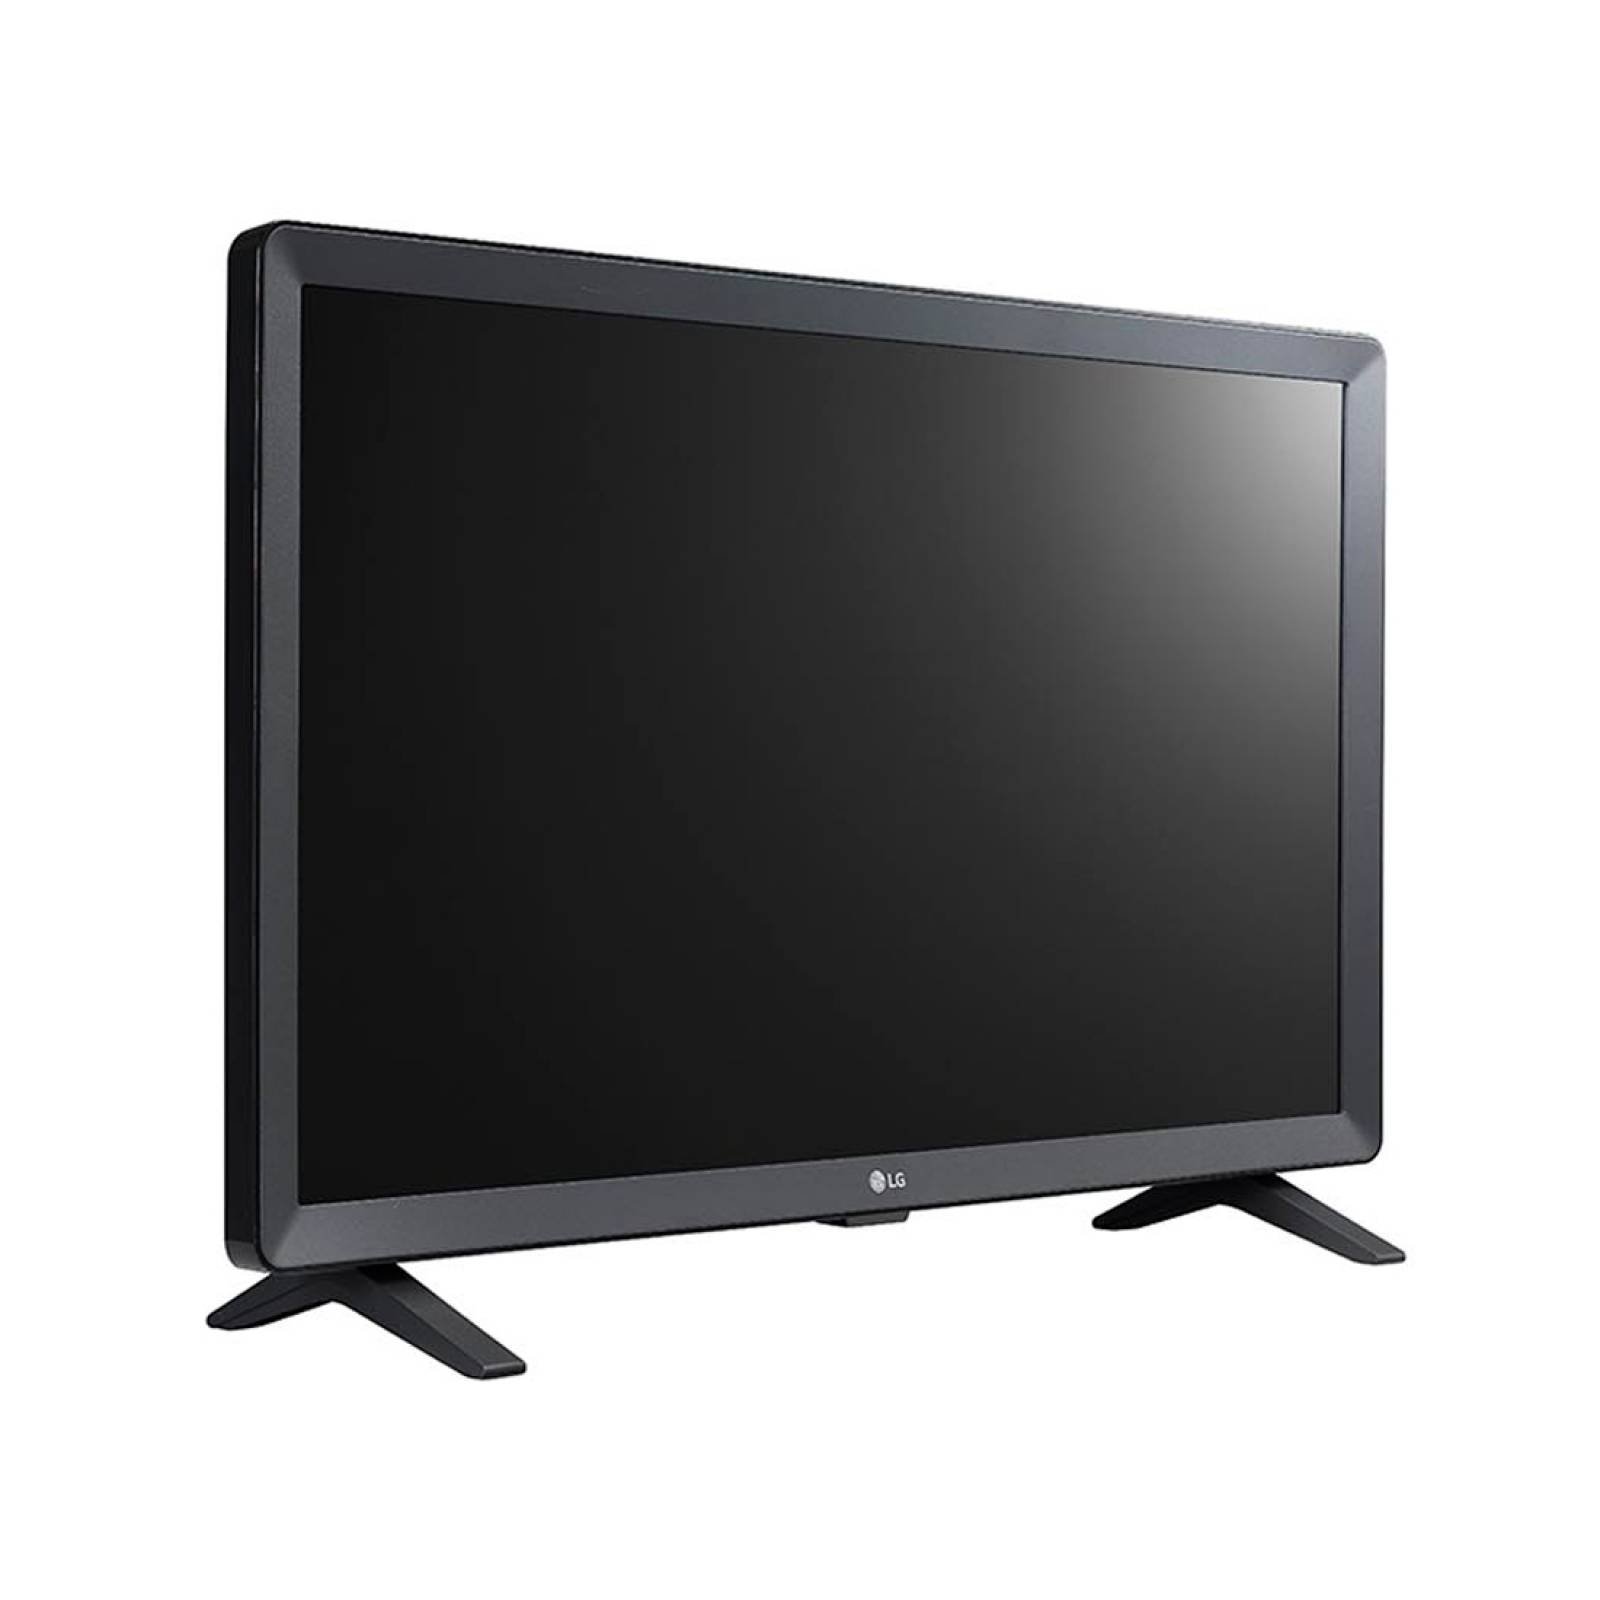 Monitor TV 24 Pulgadas LED HD HDMI USB 24TL520D-PU LG